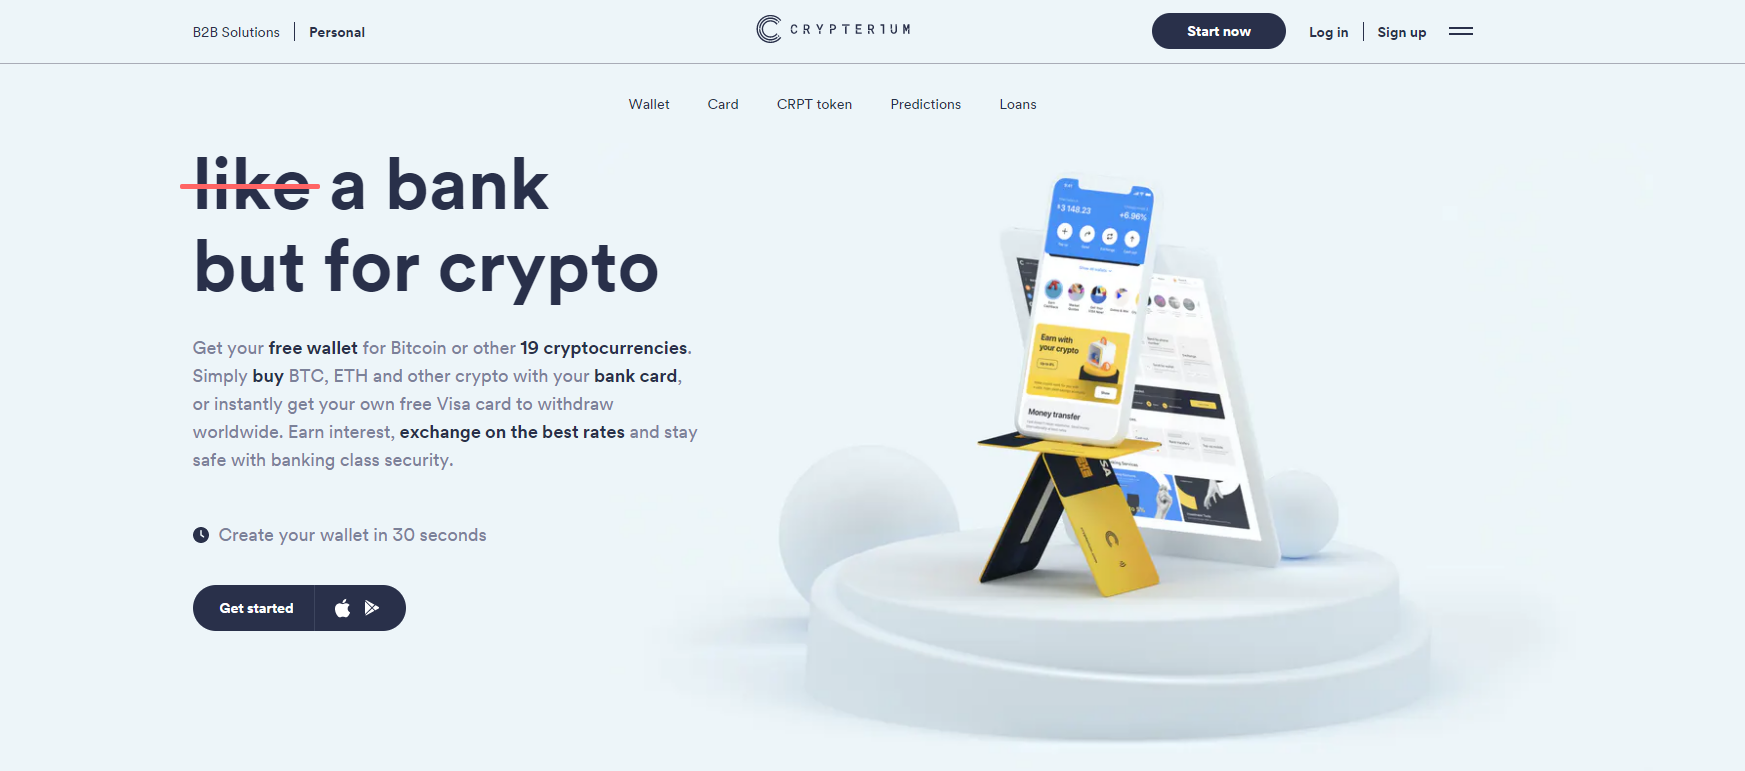 crypterium website preview 2021